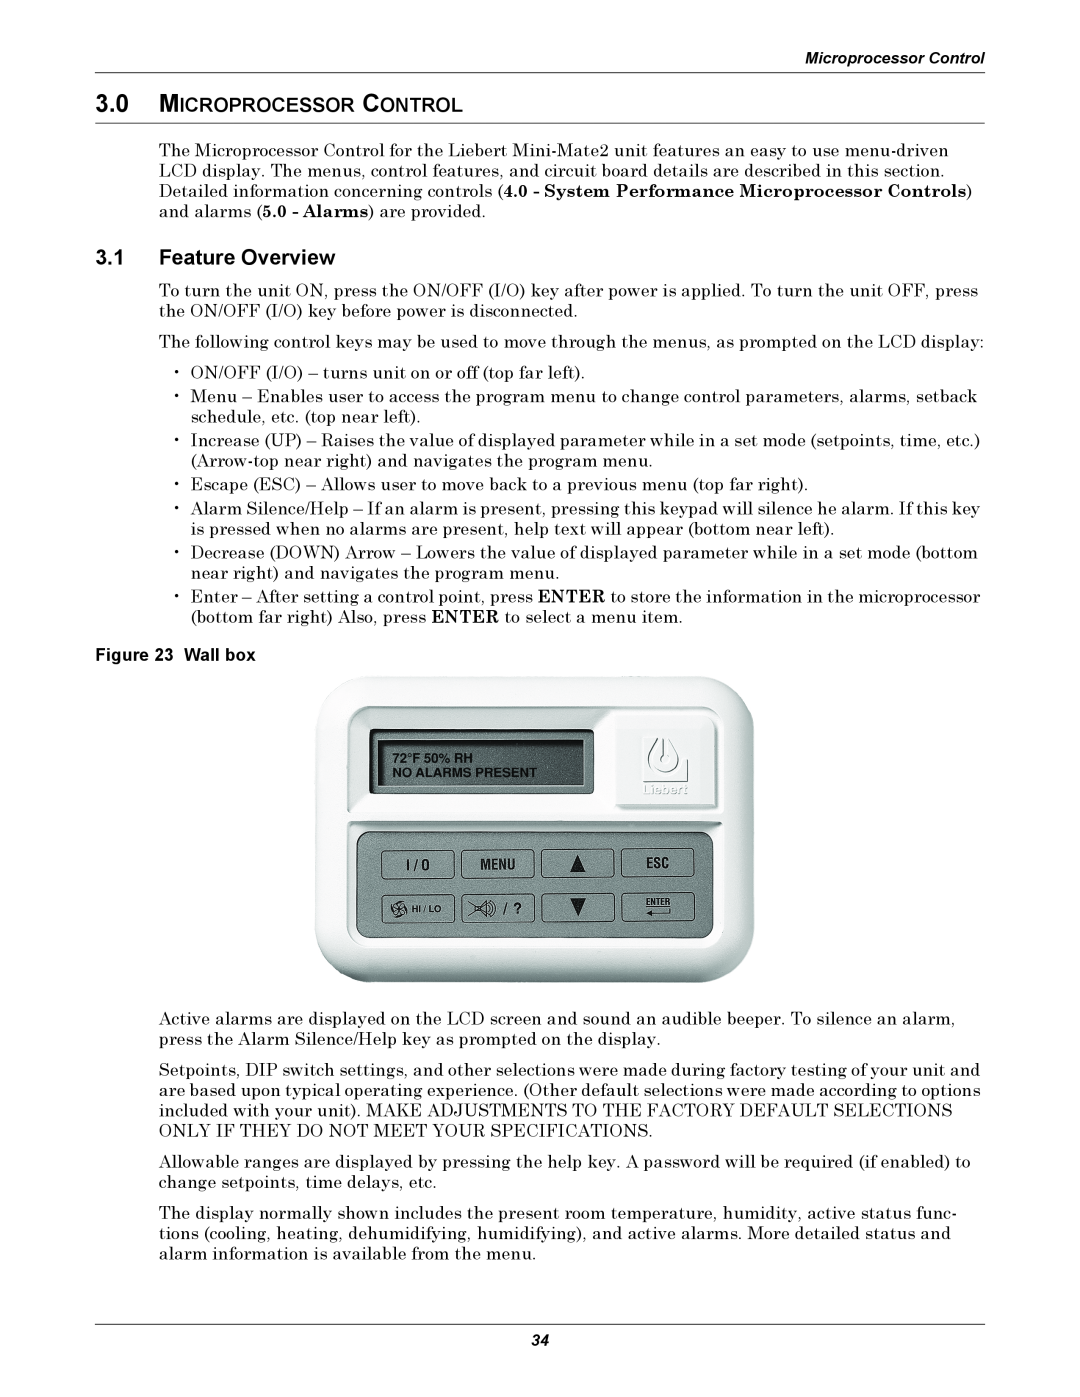 Liebert 8 Tons, 50 & 60Hz user manual 3.1Feature Overview, 3.0MICROPROCESSOR CONTROL, Wall box 